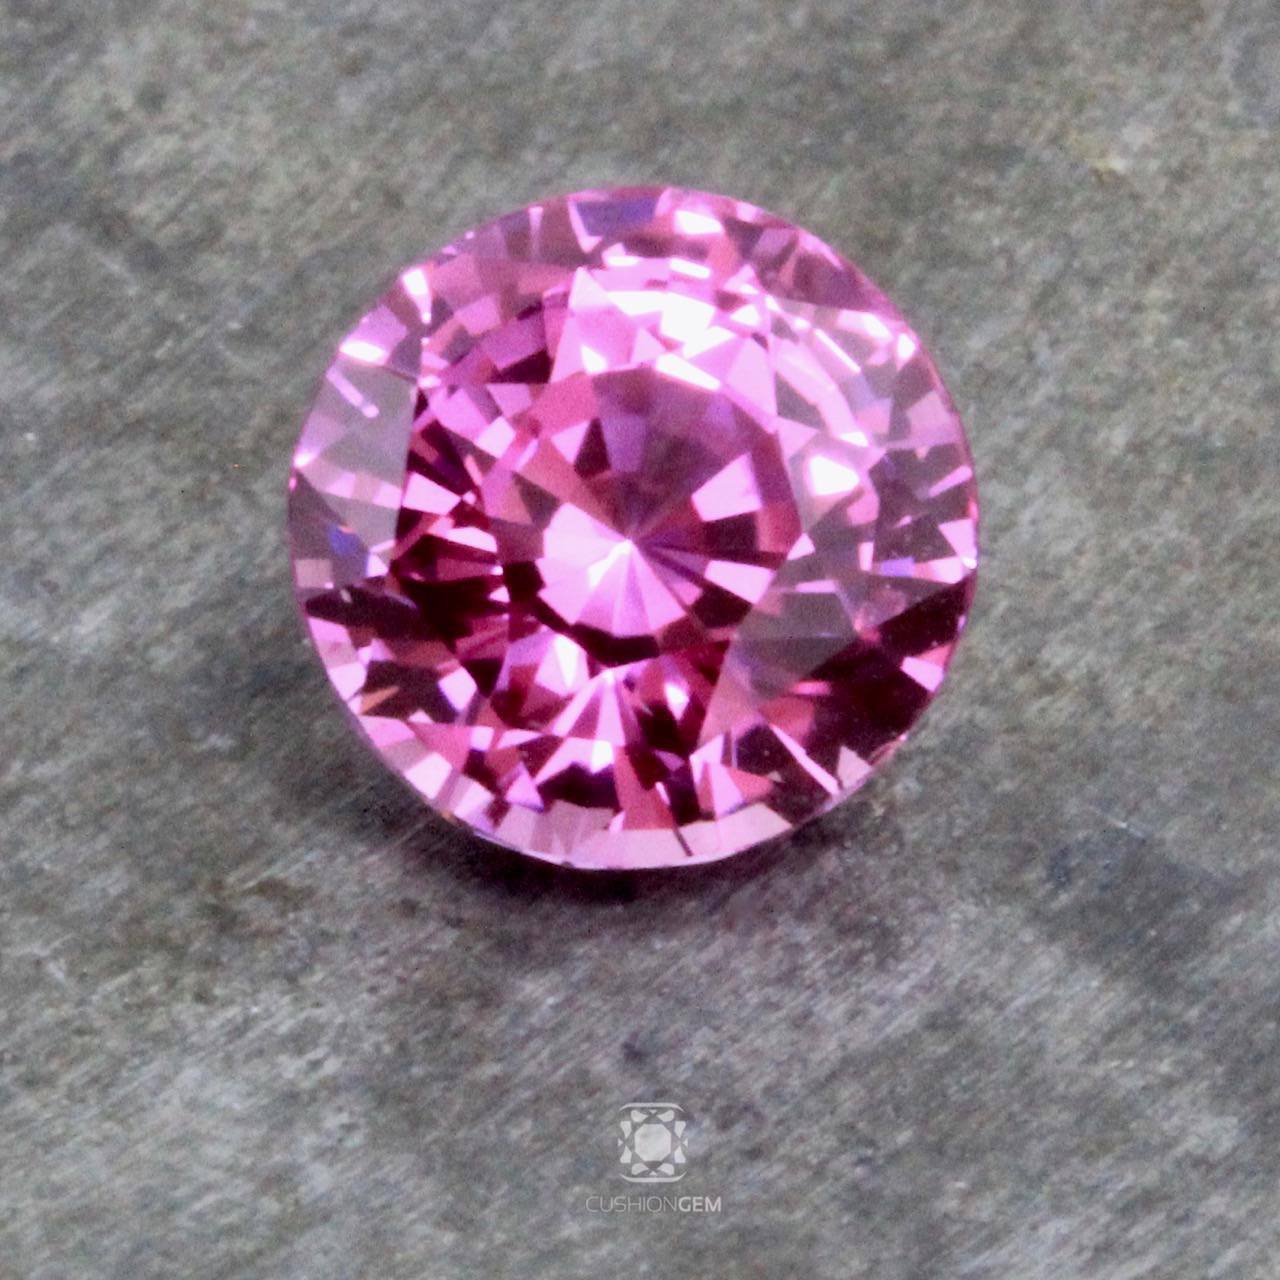 A 4+ carat round un-heated pink sapphire